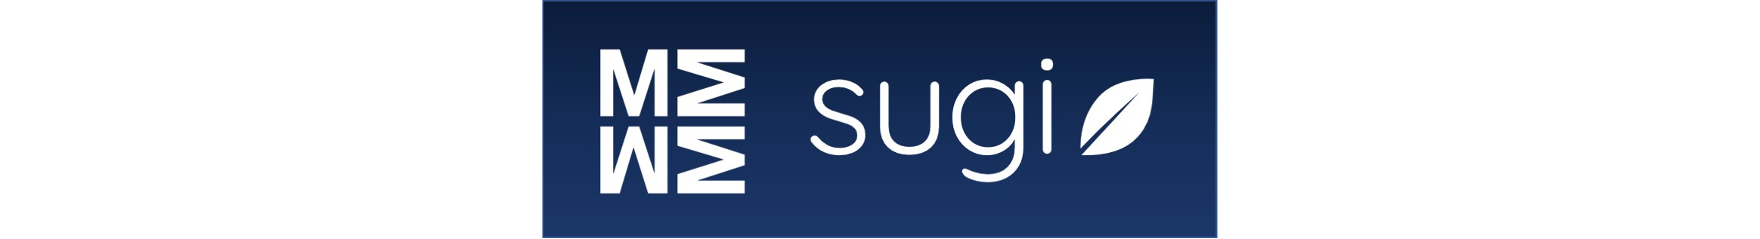 MMMM and Sugi logos